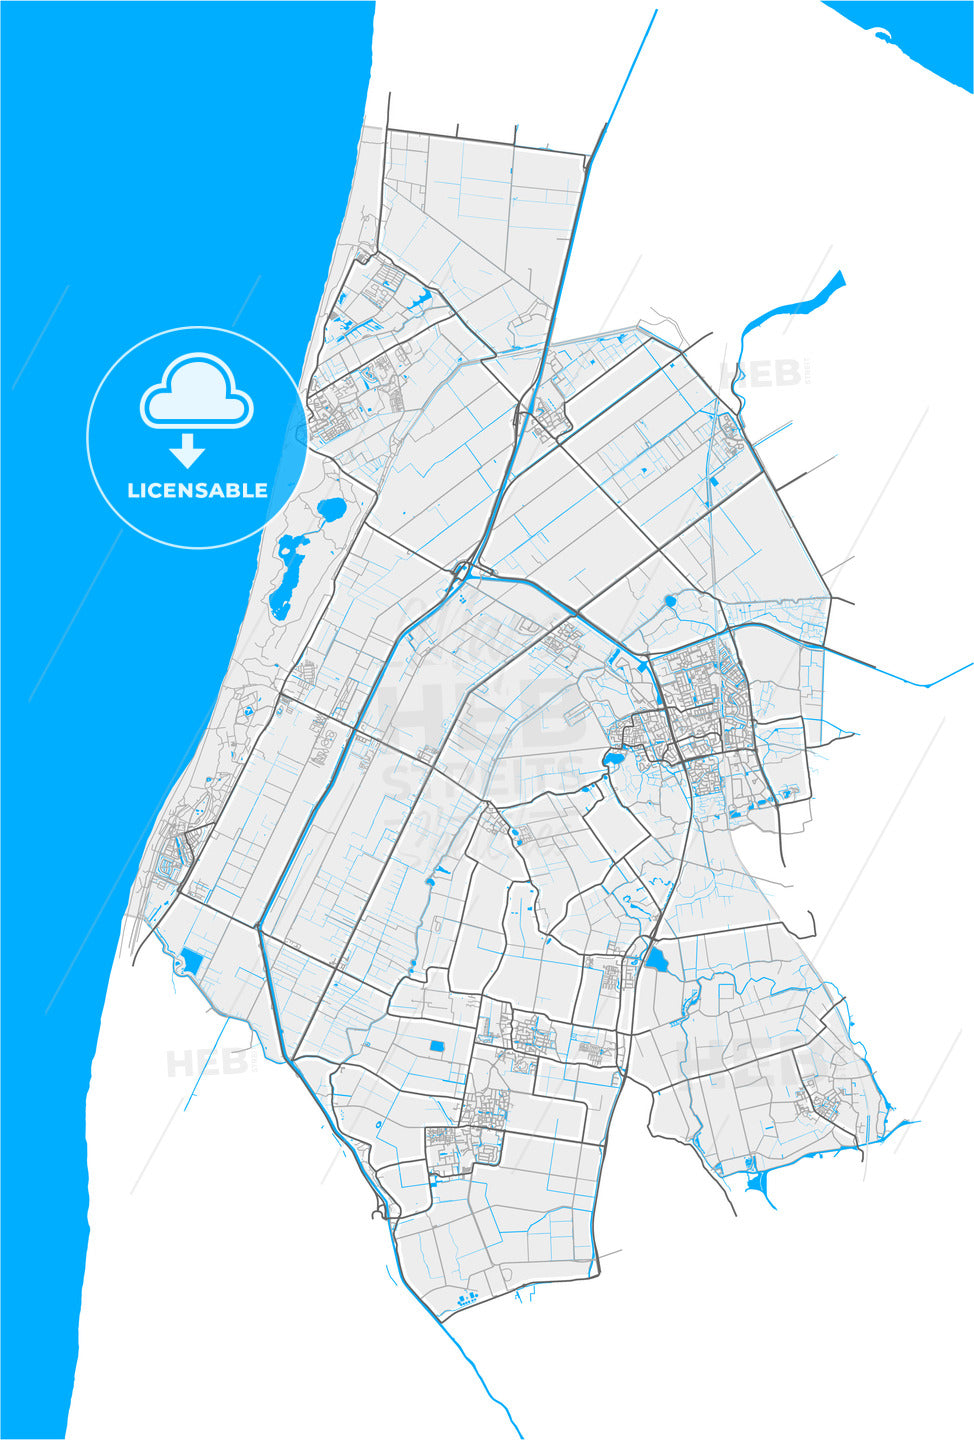 Schagen, North Holland, Netherlands, high quality vector map